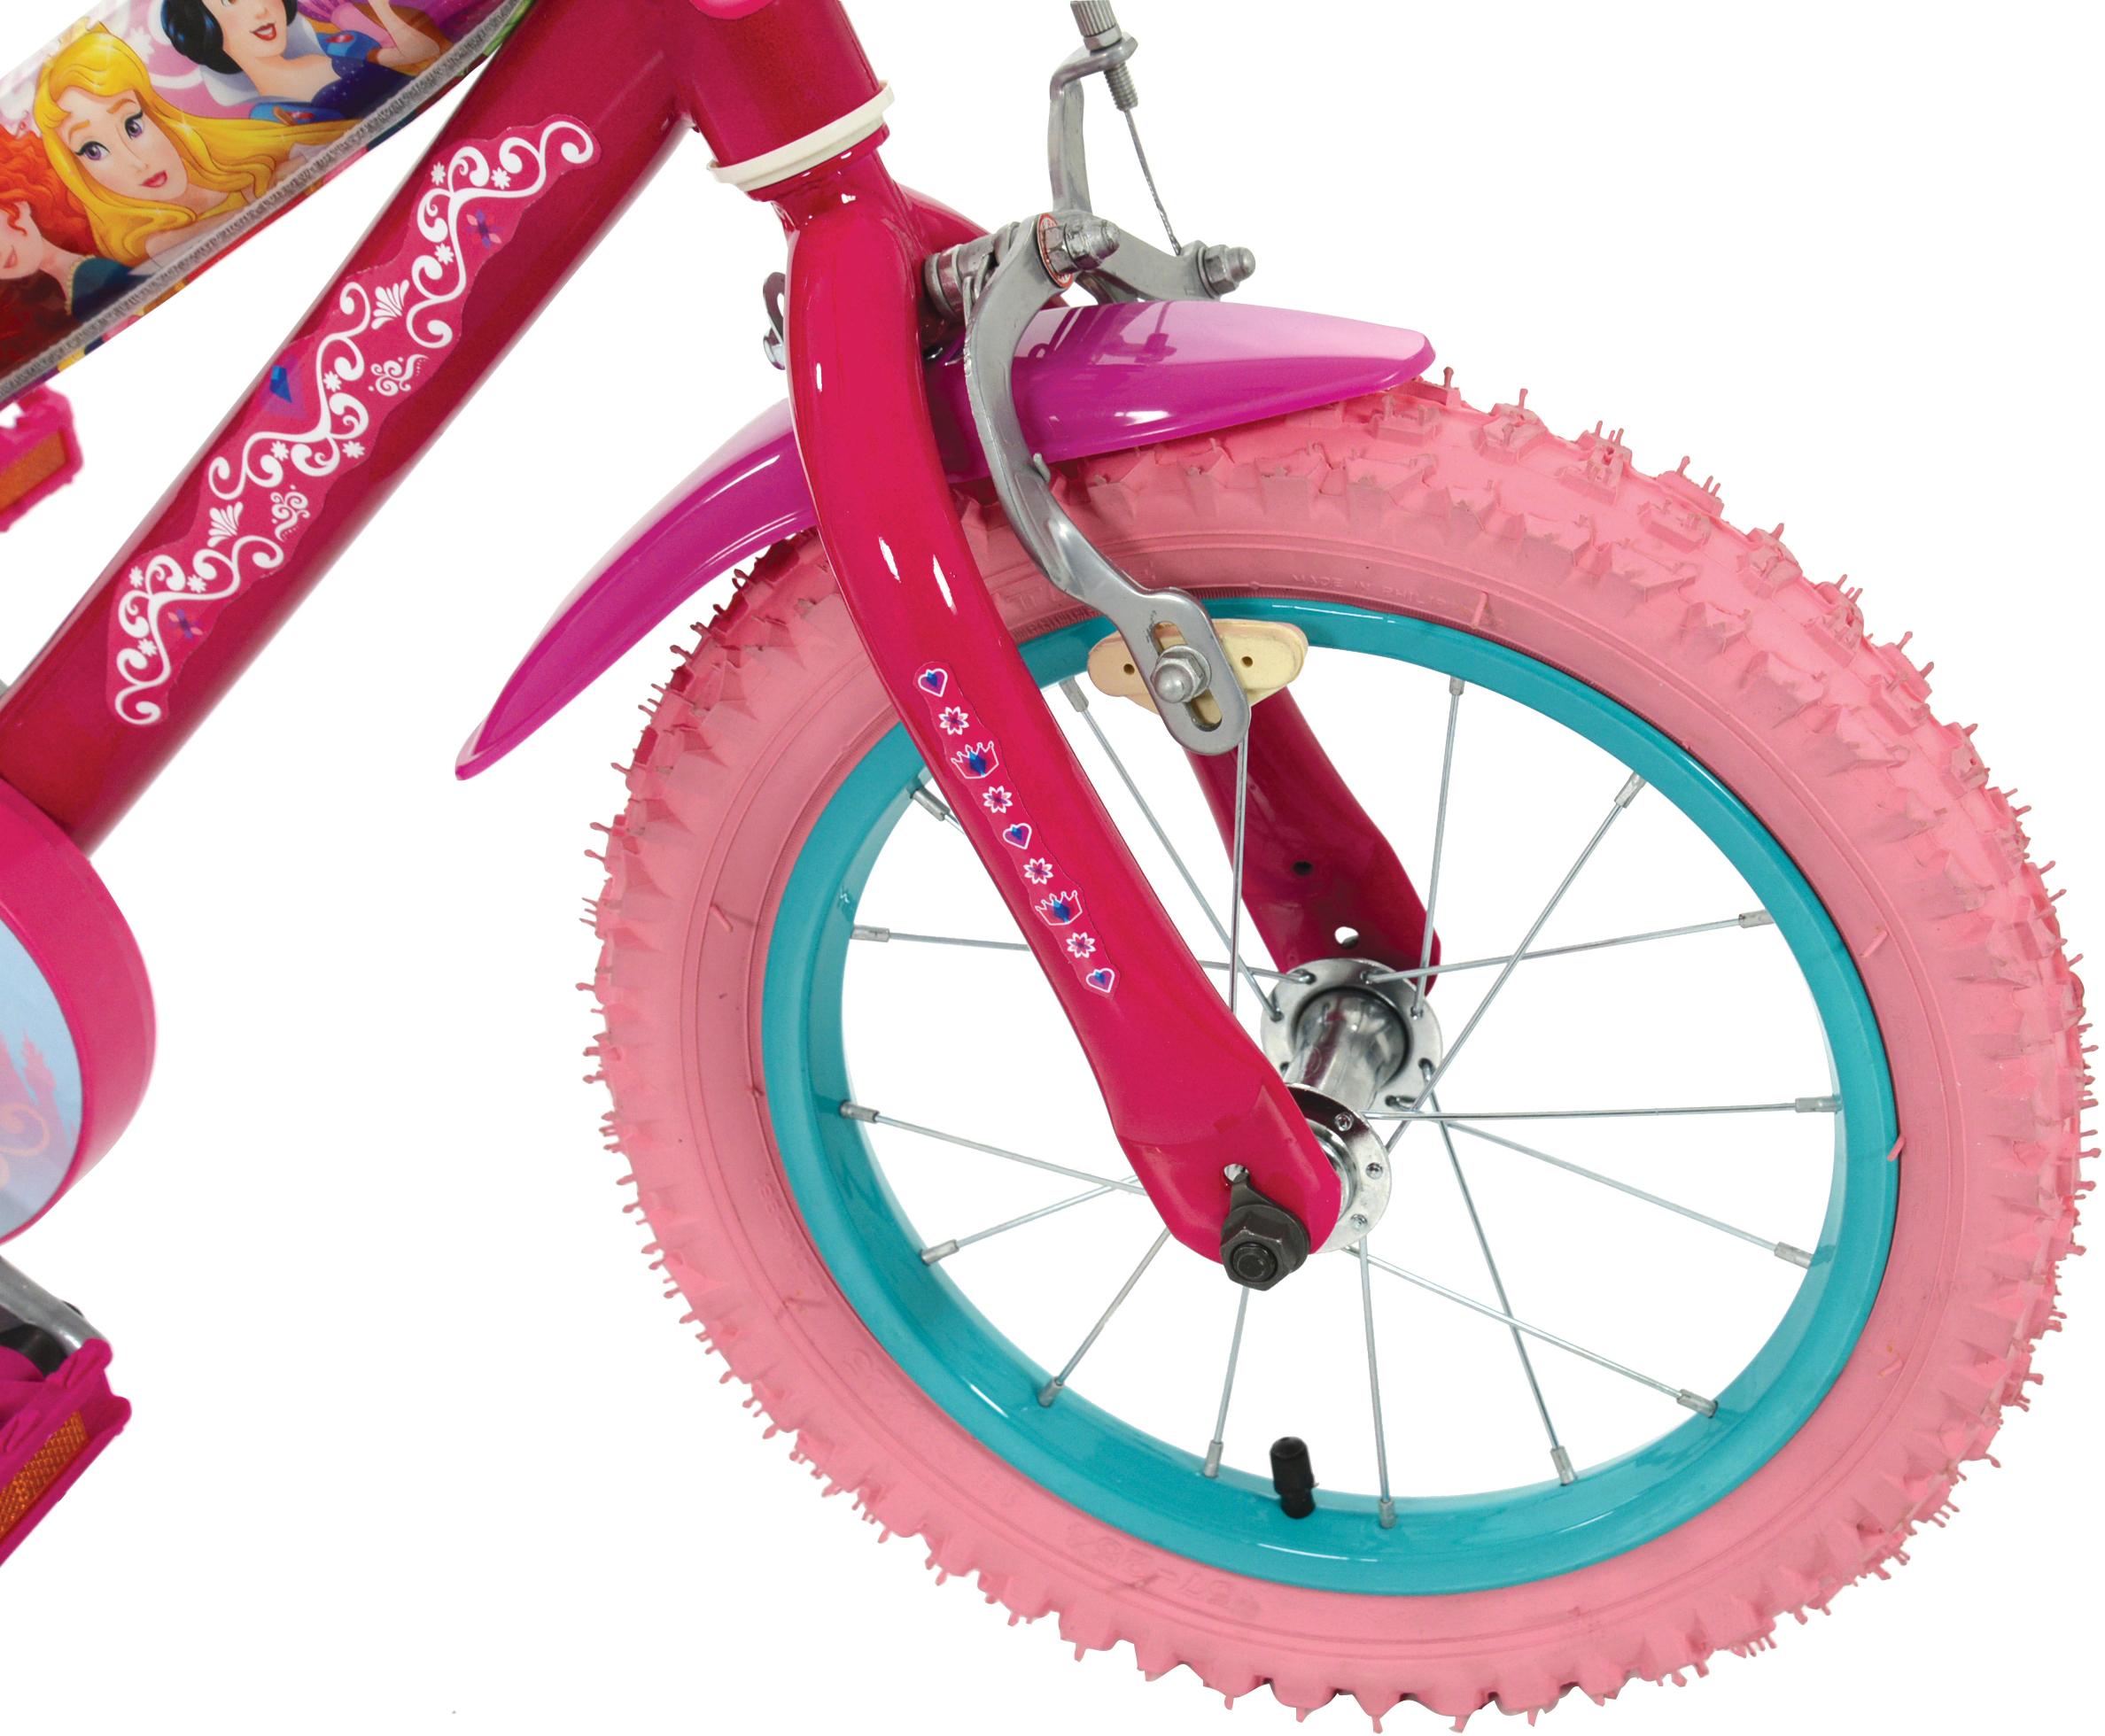 cosmic princess 14 inch bike